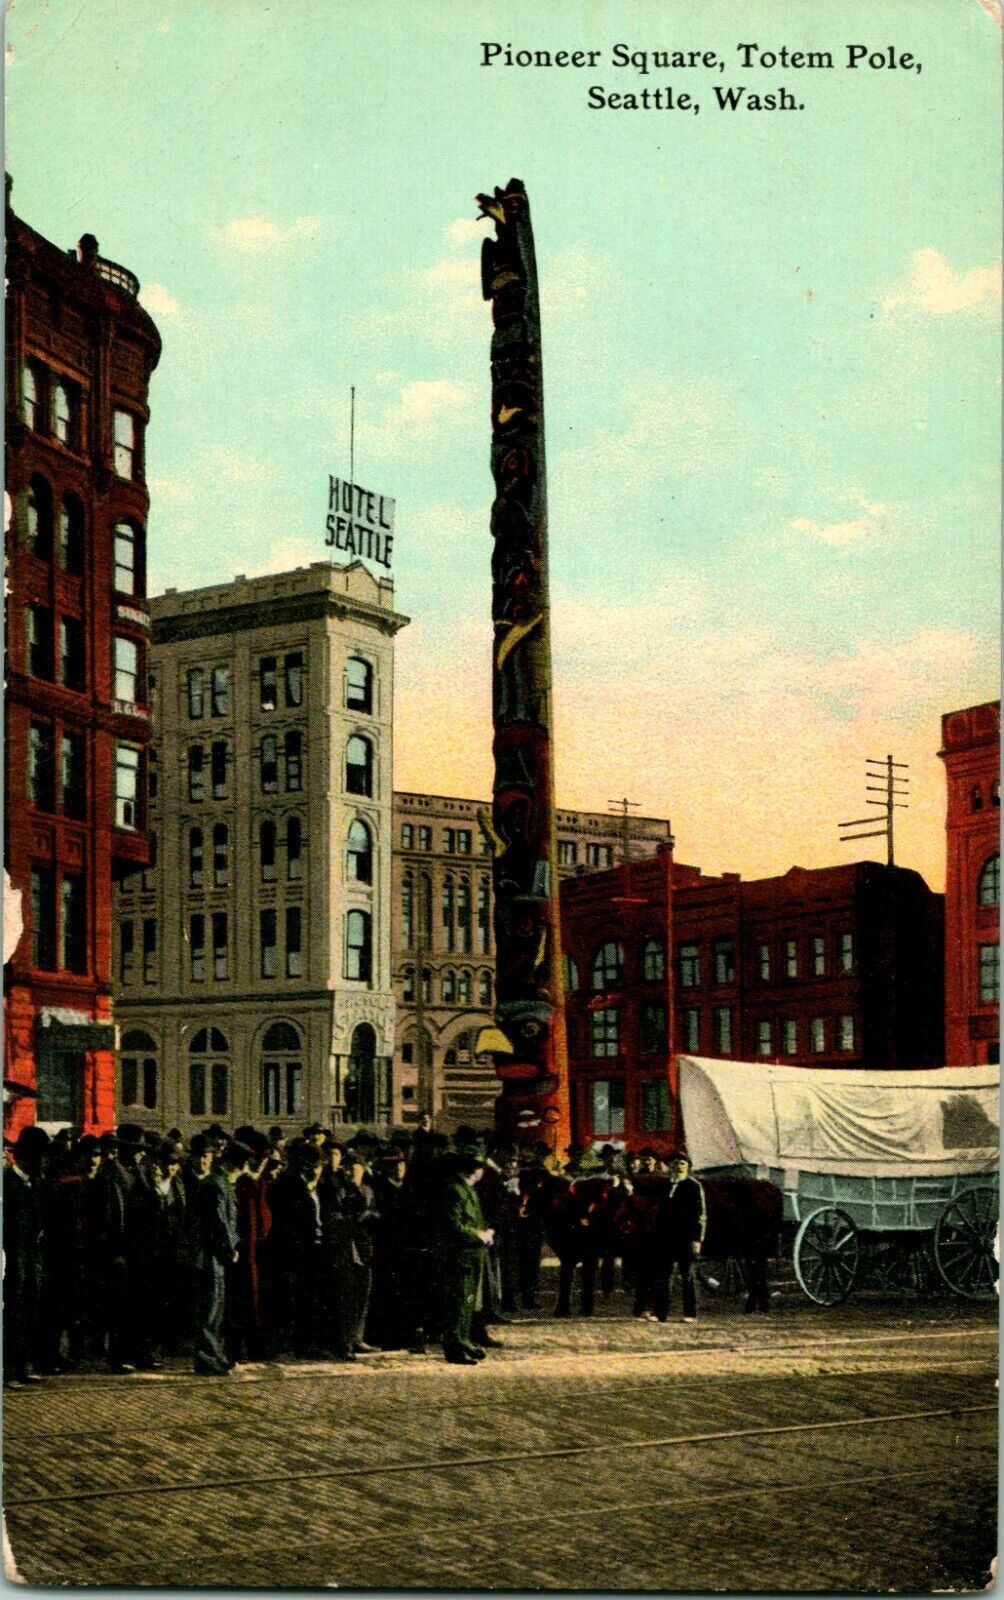 Vtg Postcard c 1907 Oregon Trail Monument Expo Seattle WA Pioneer Sq Totem Pole